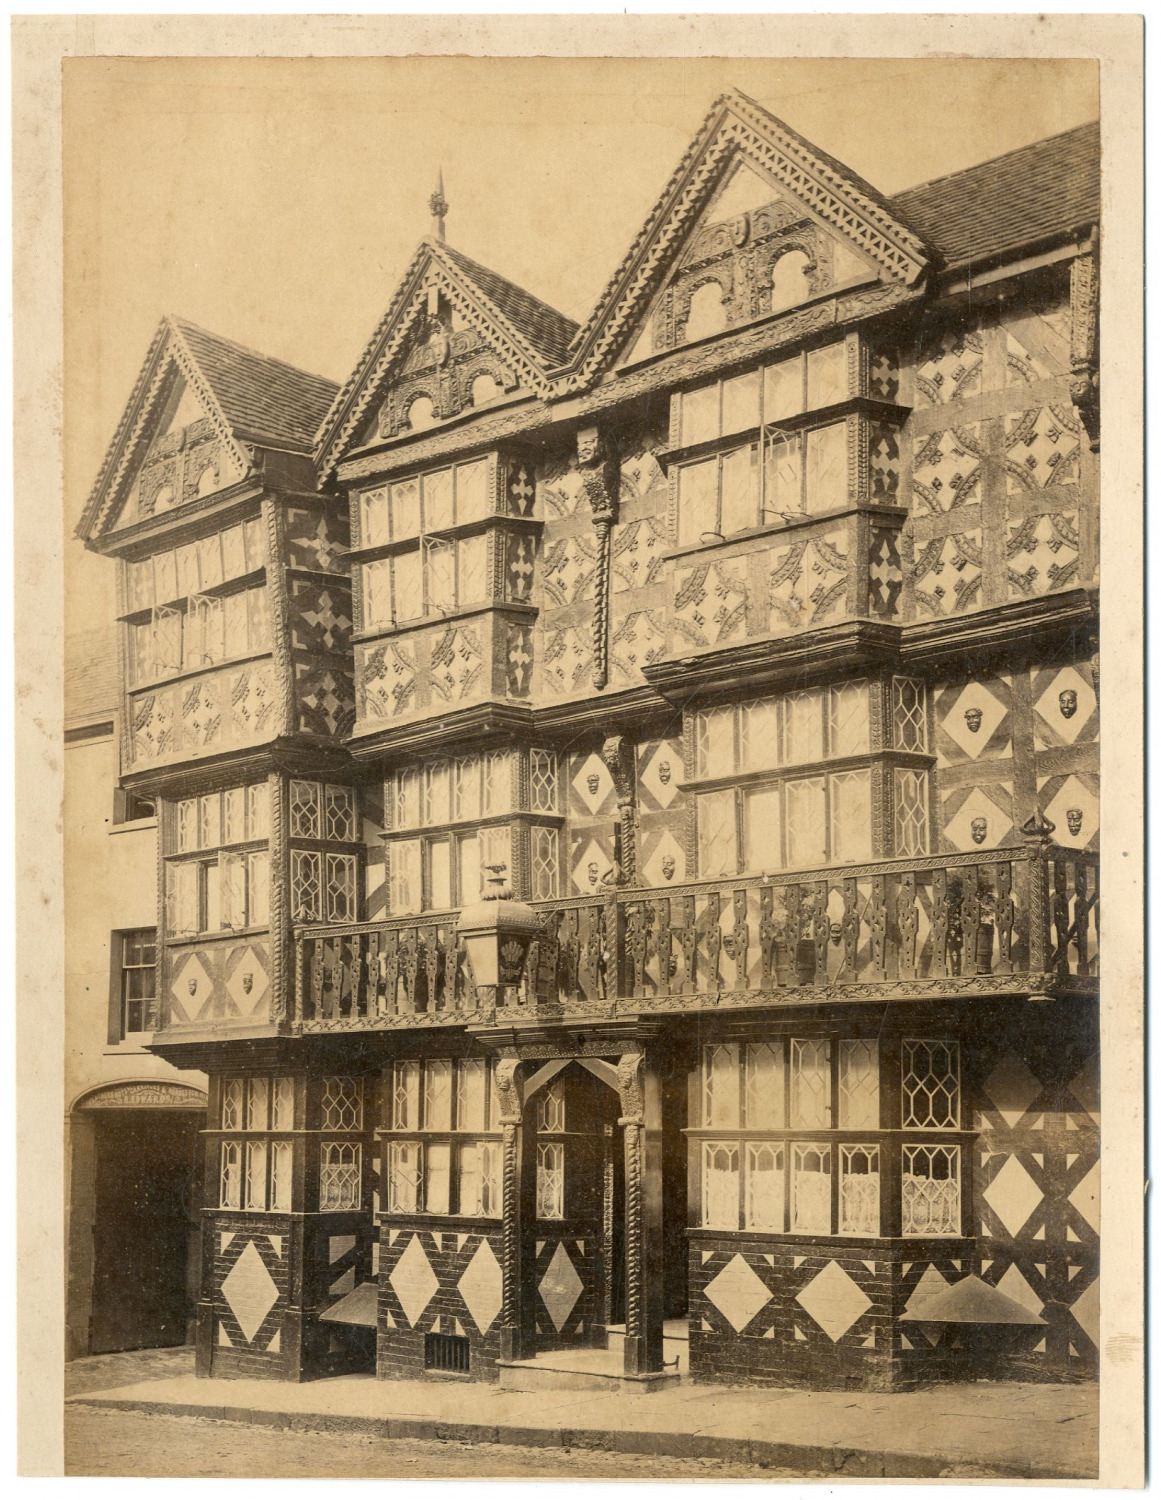 England, Old Half-Timbered Houses, ID Vintage Print Albuminated Print 